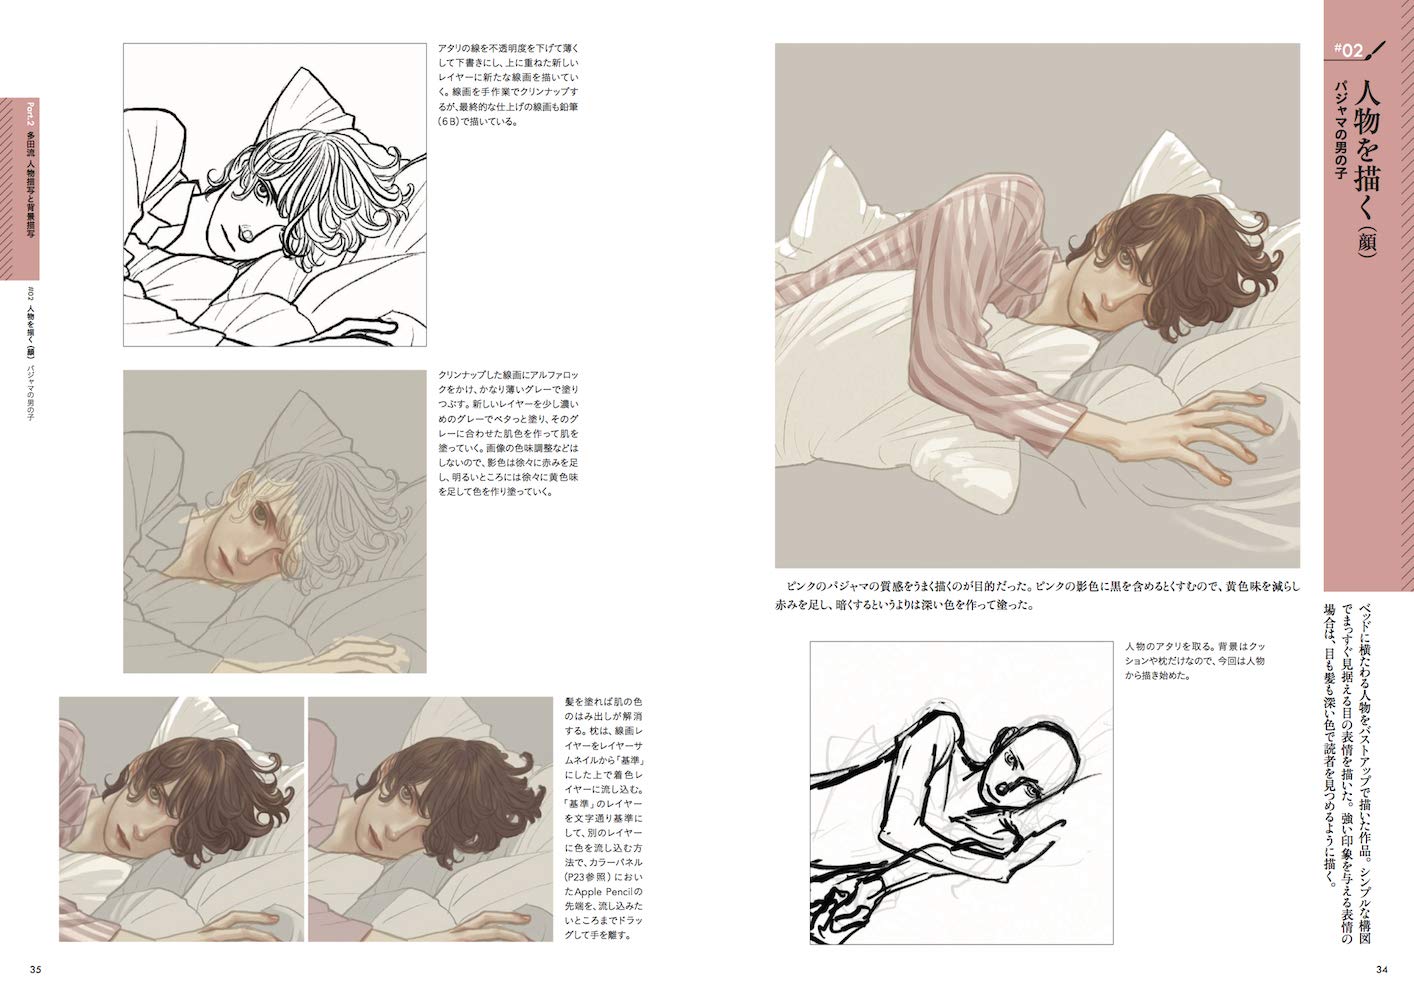 iPad Pro+Procreate, How To Draw Manga and Illustrations